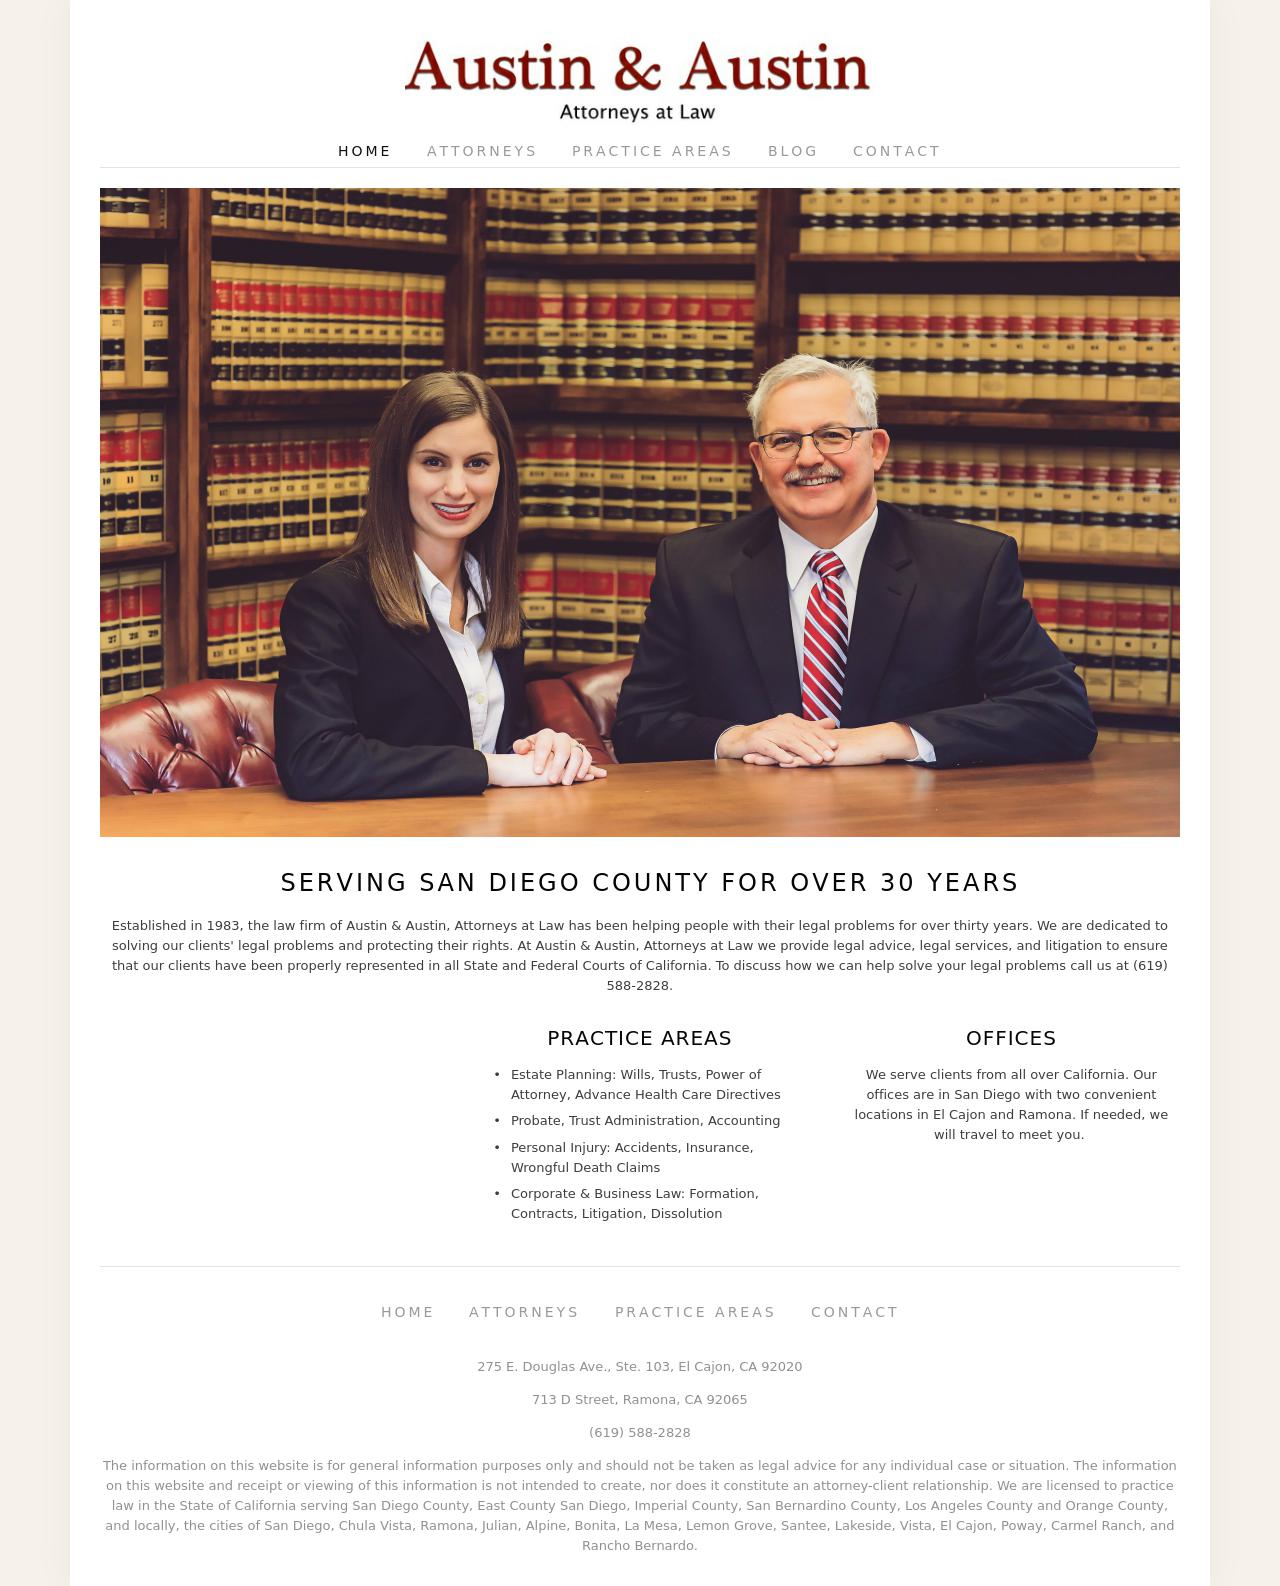 Austin & Austin - El Cajon CA Lawyers